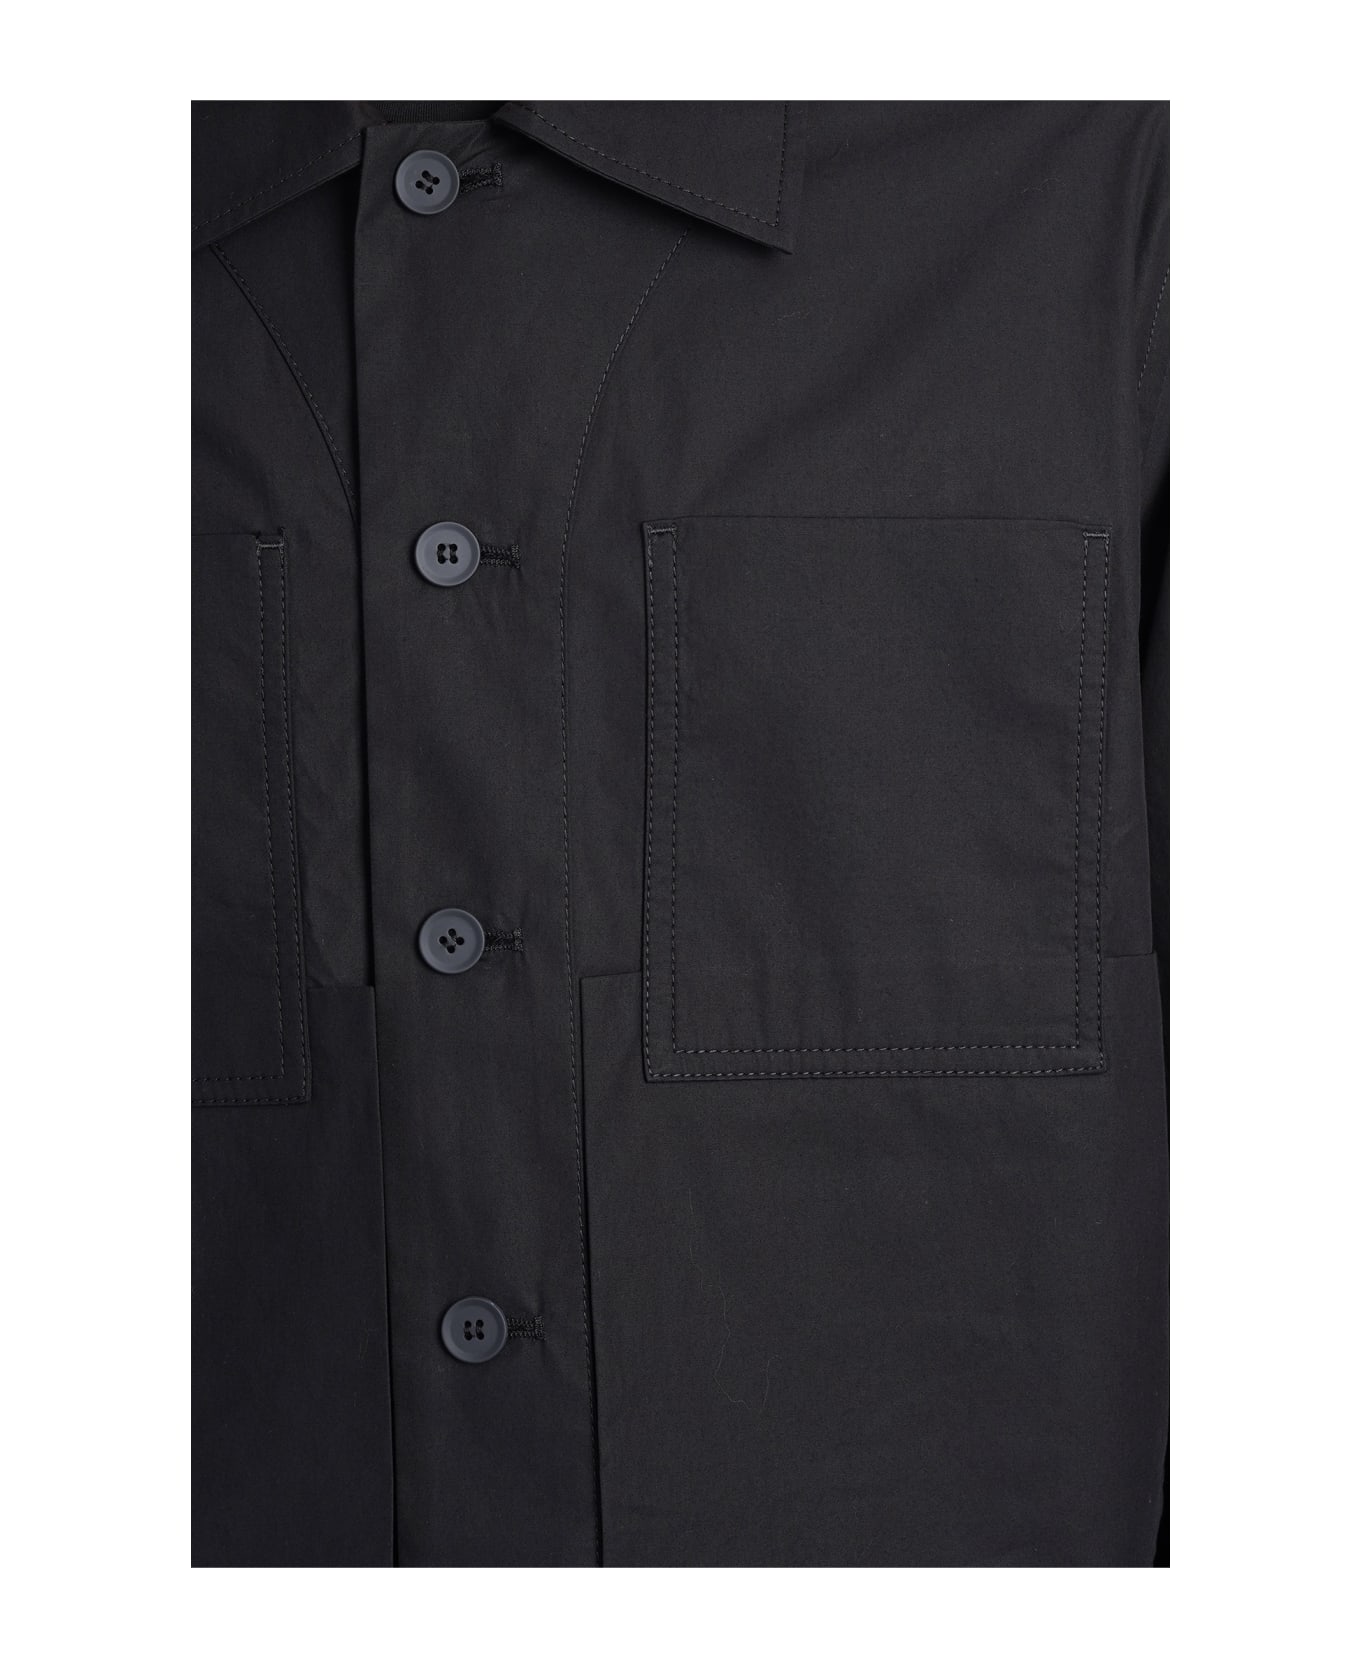 Craig Green Casual Jacket In Black Nylon - black